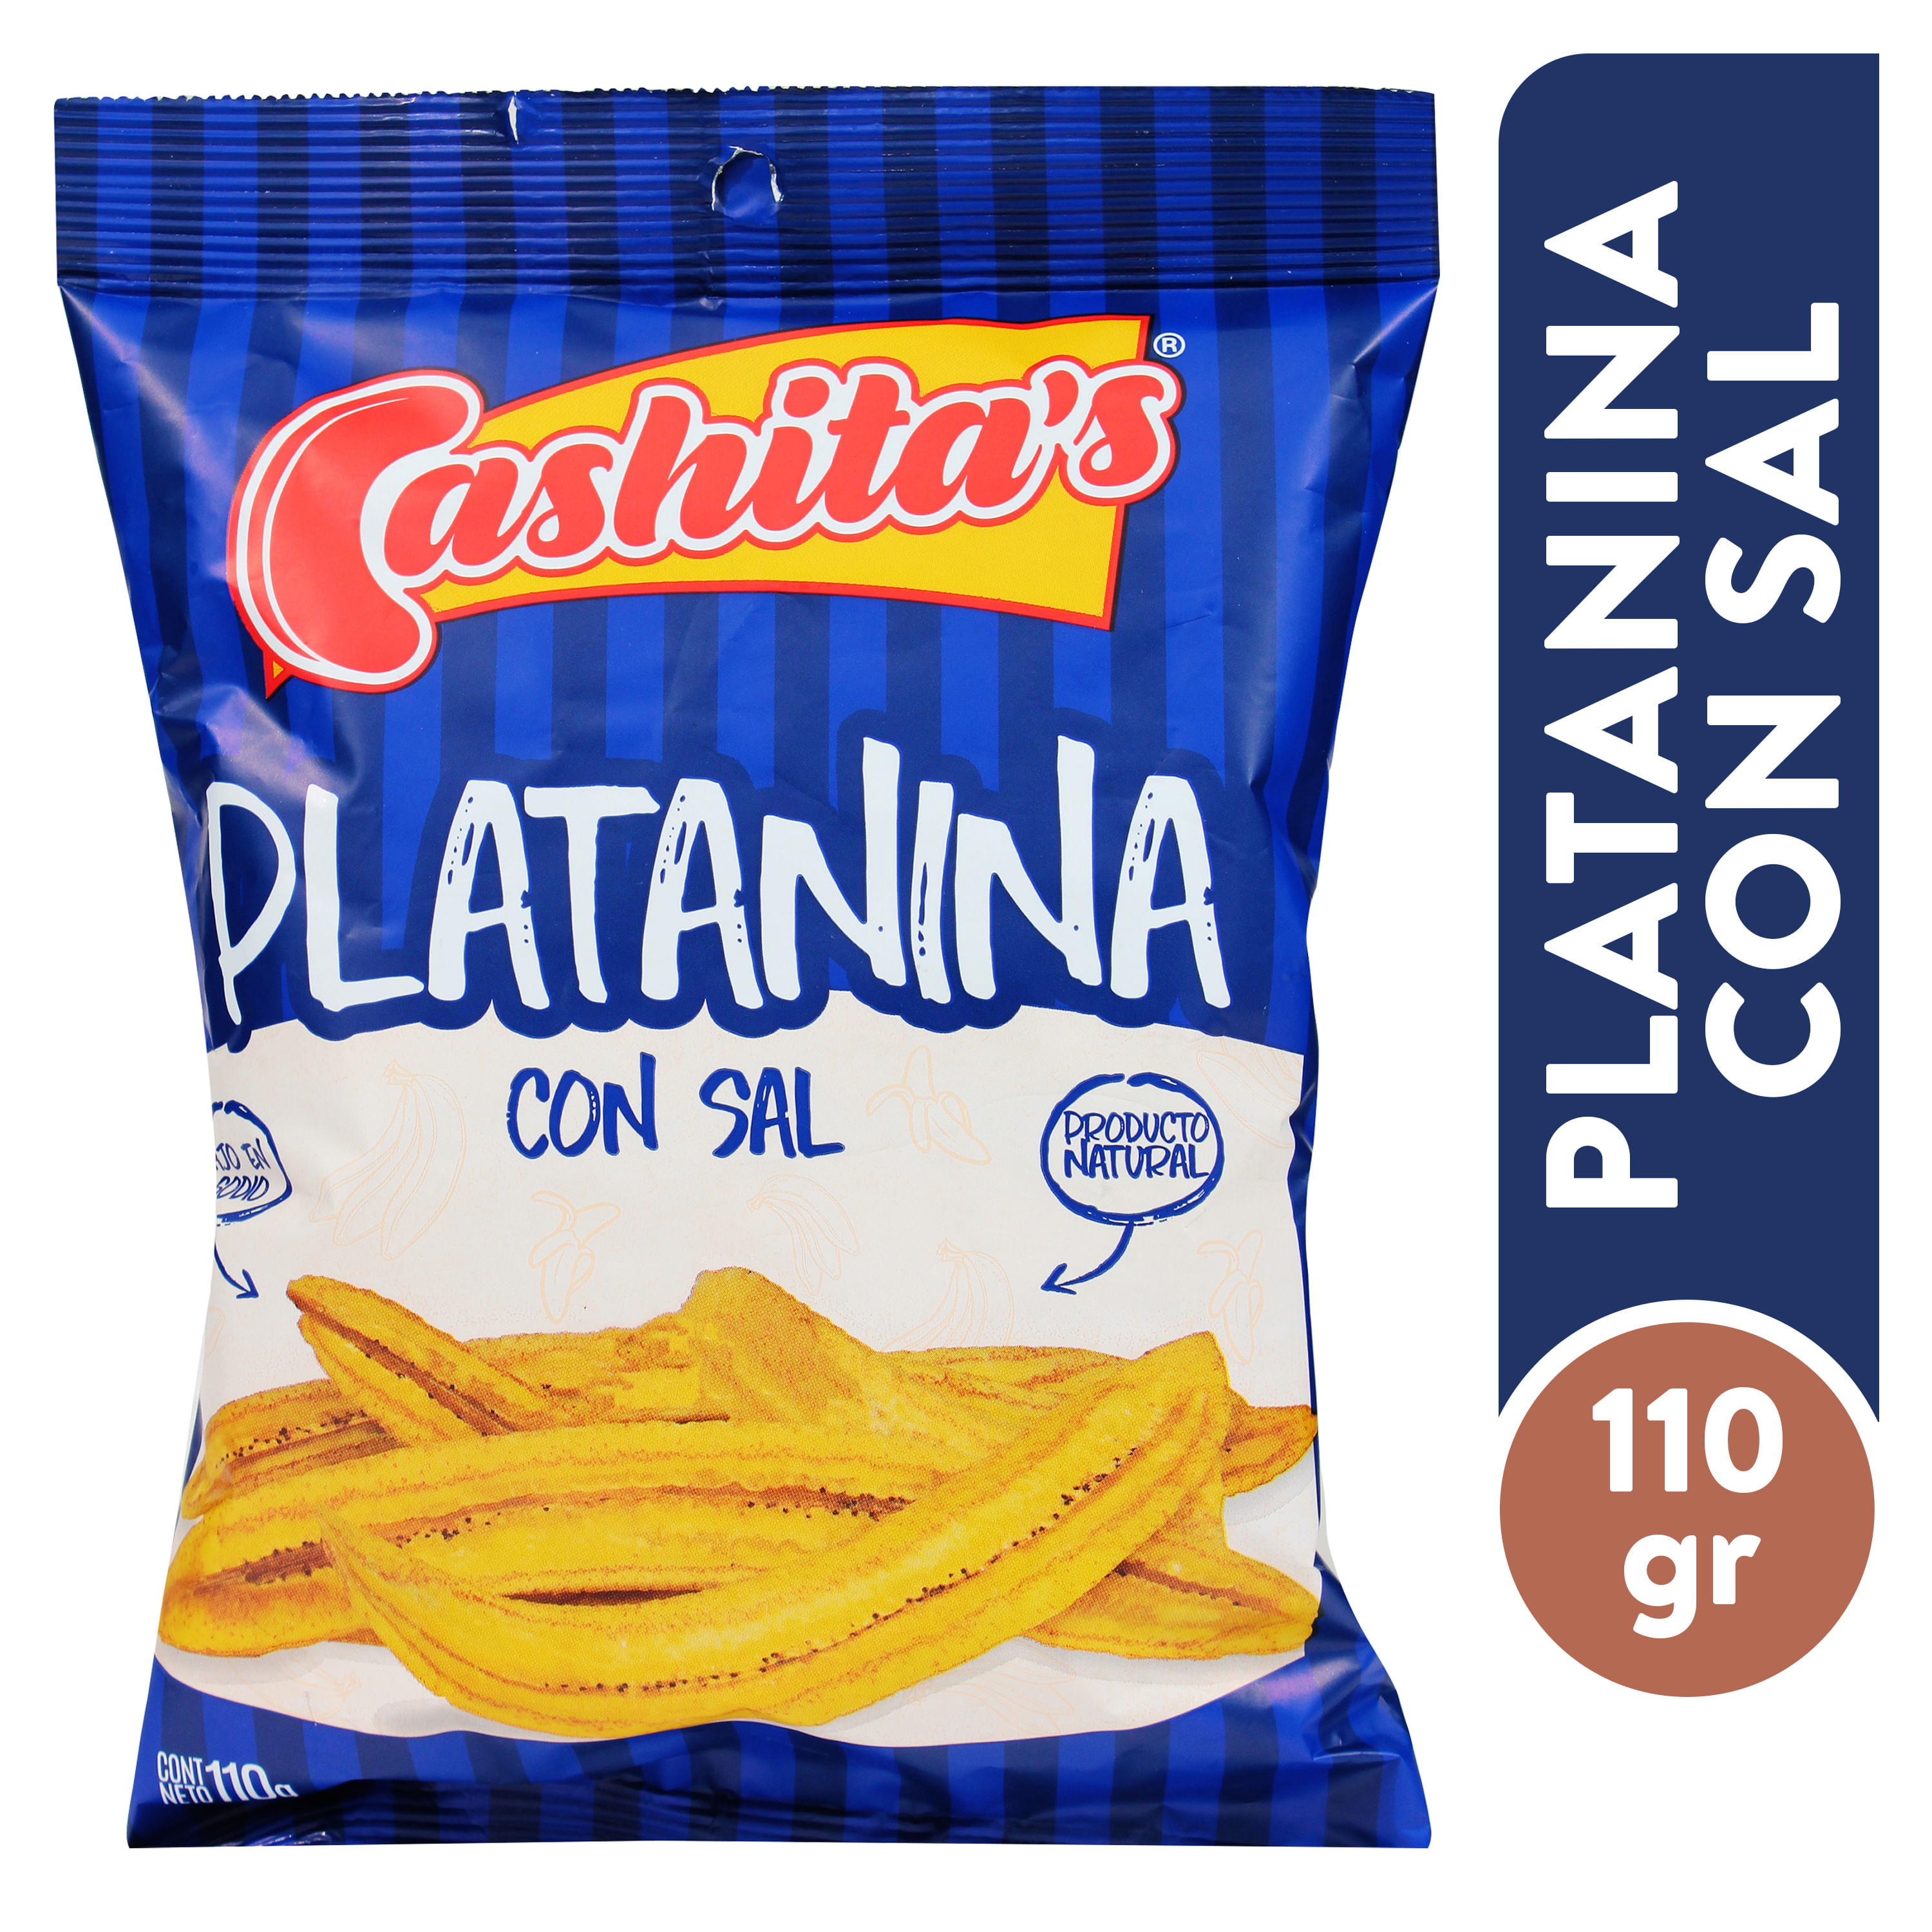 Platanina-Cashitas-Bolsa-110gr-1-11857